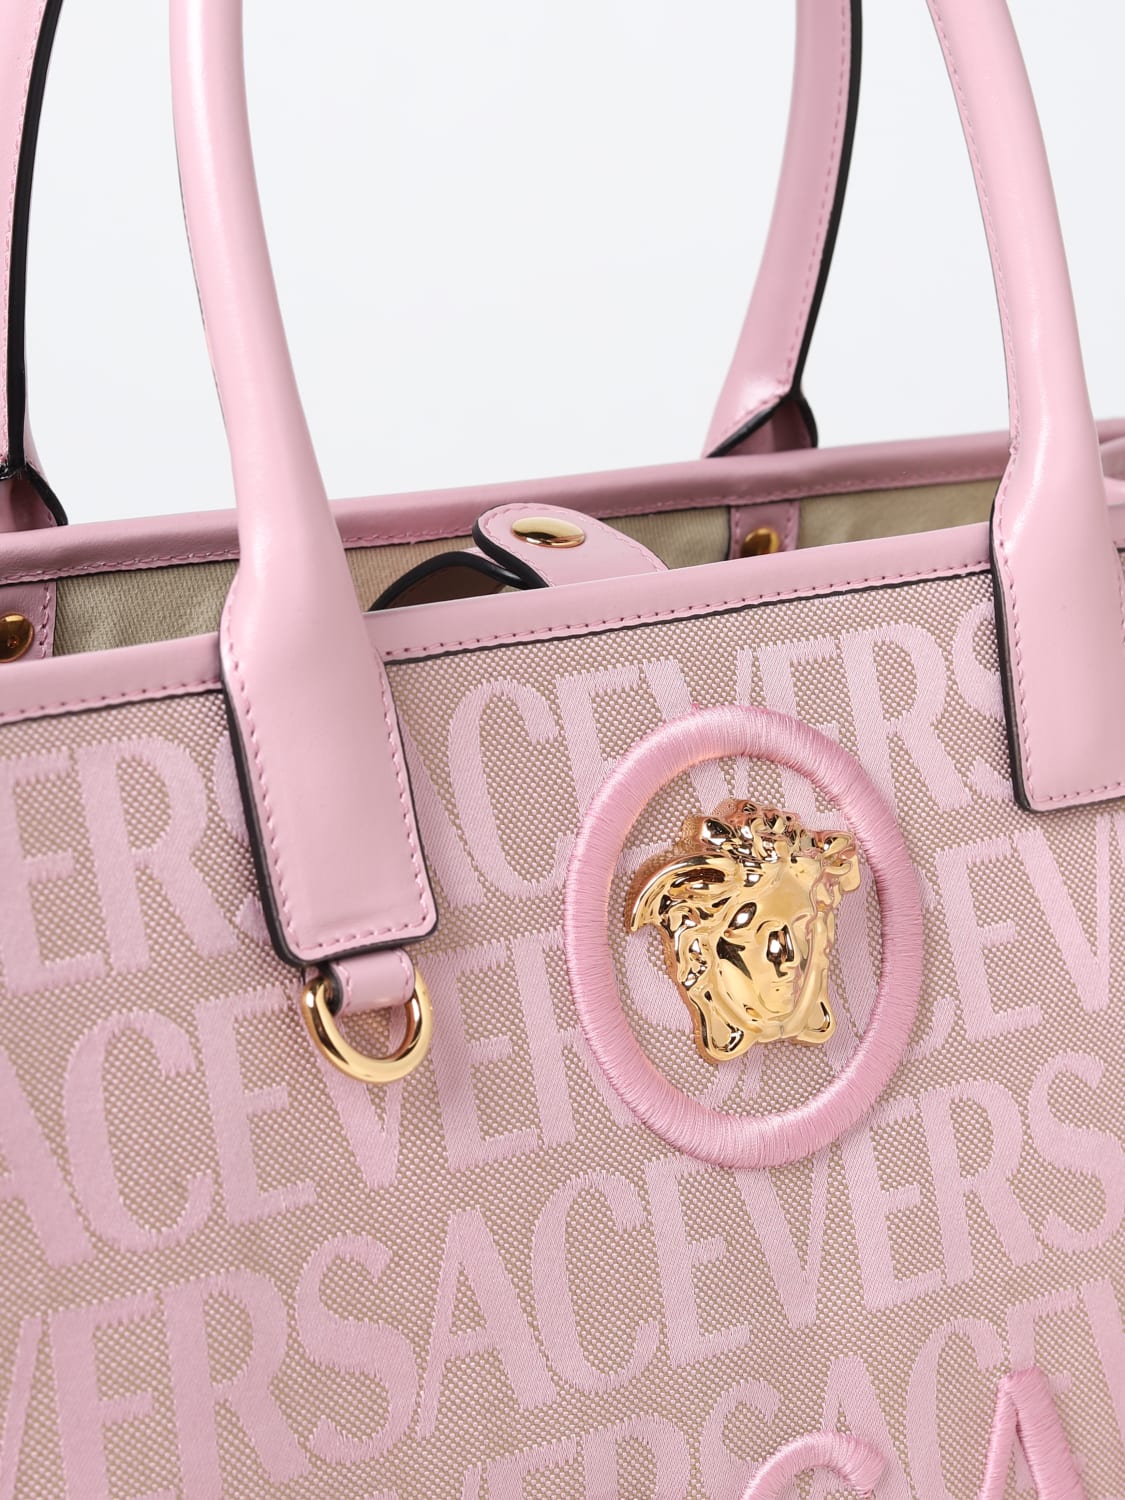 Versace  Pink bags outfit, Versace bag, Versace handbags